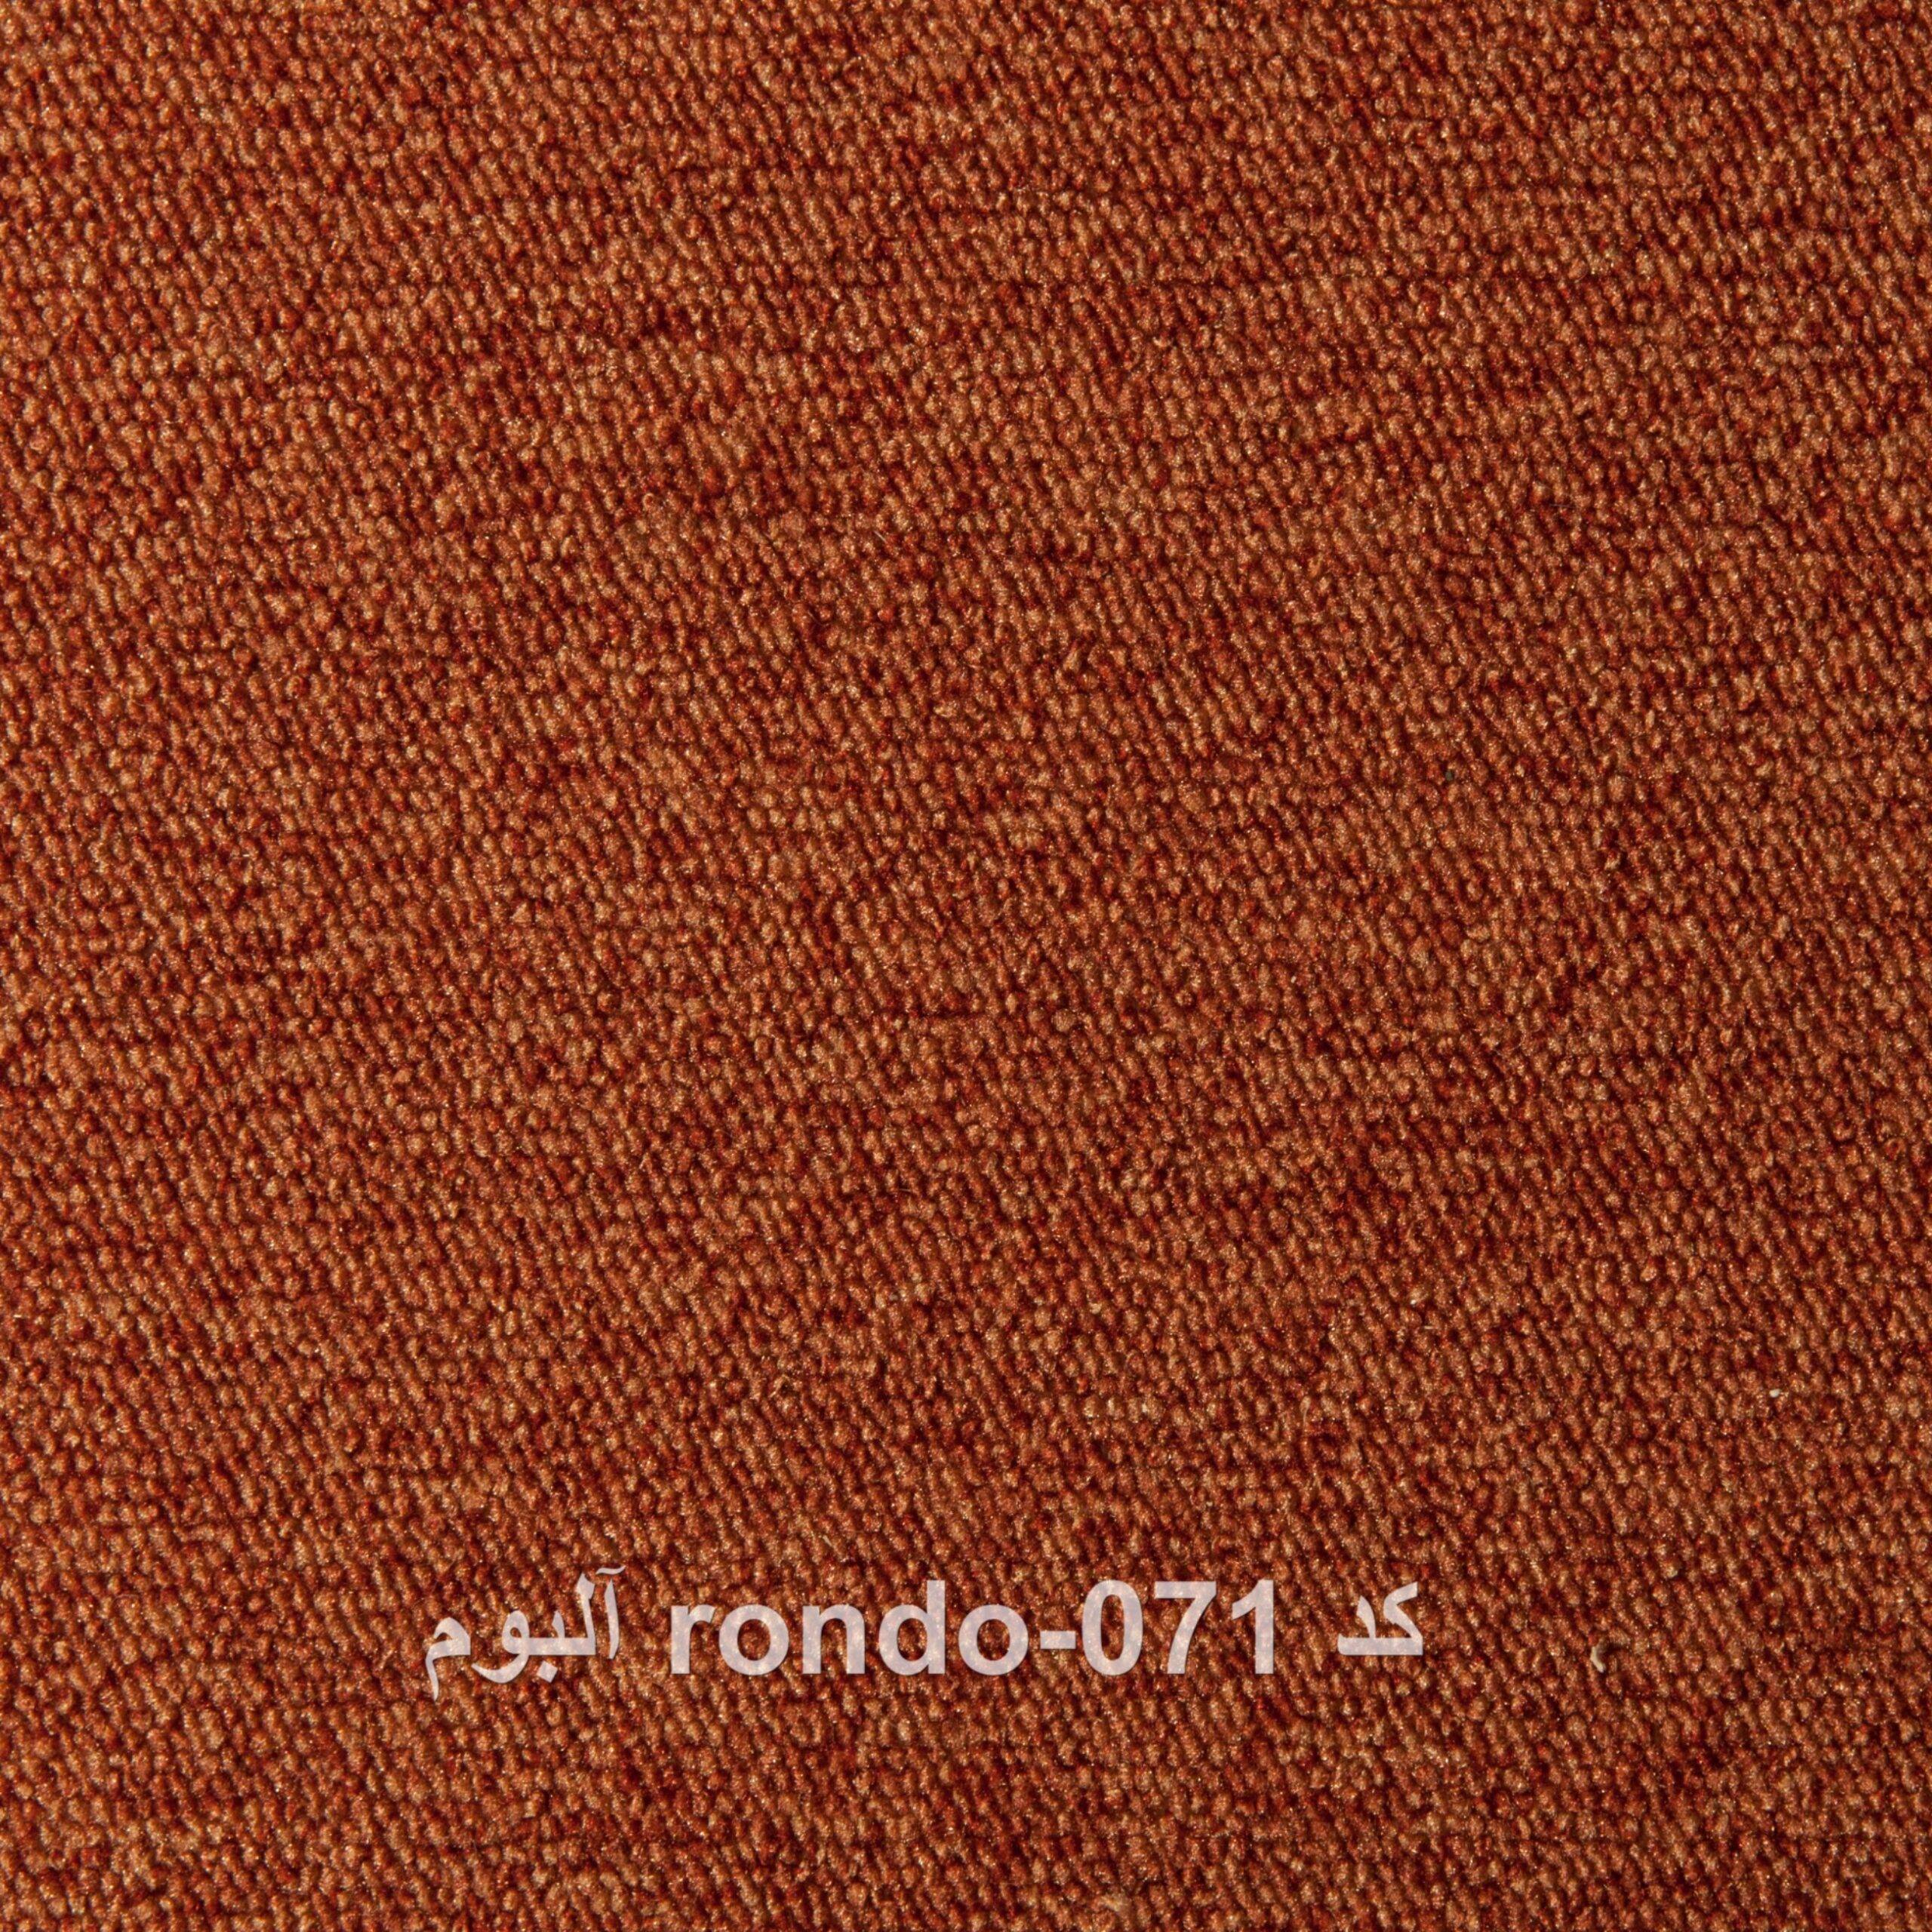 rondo-071